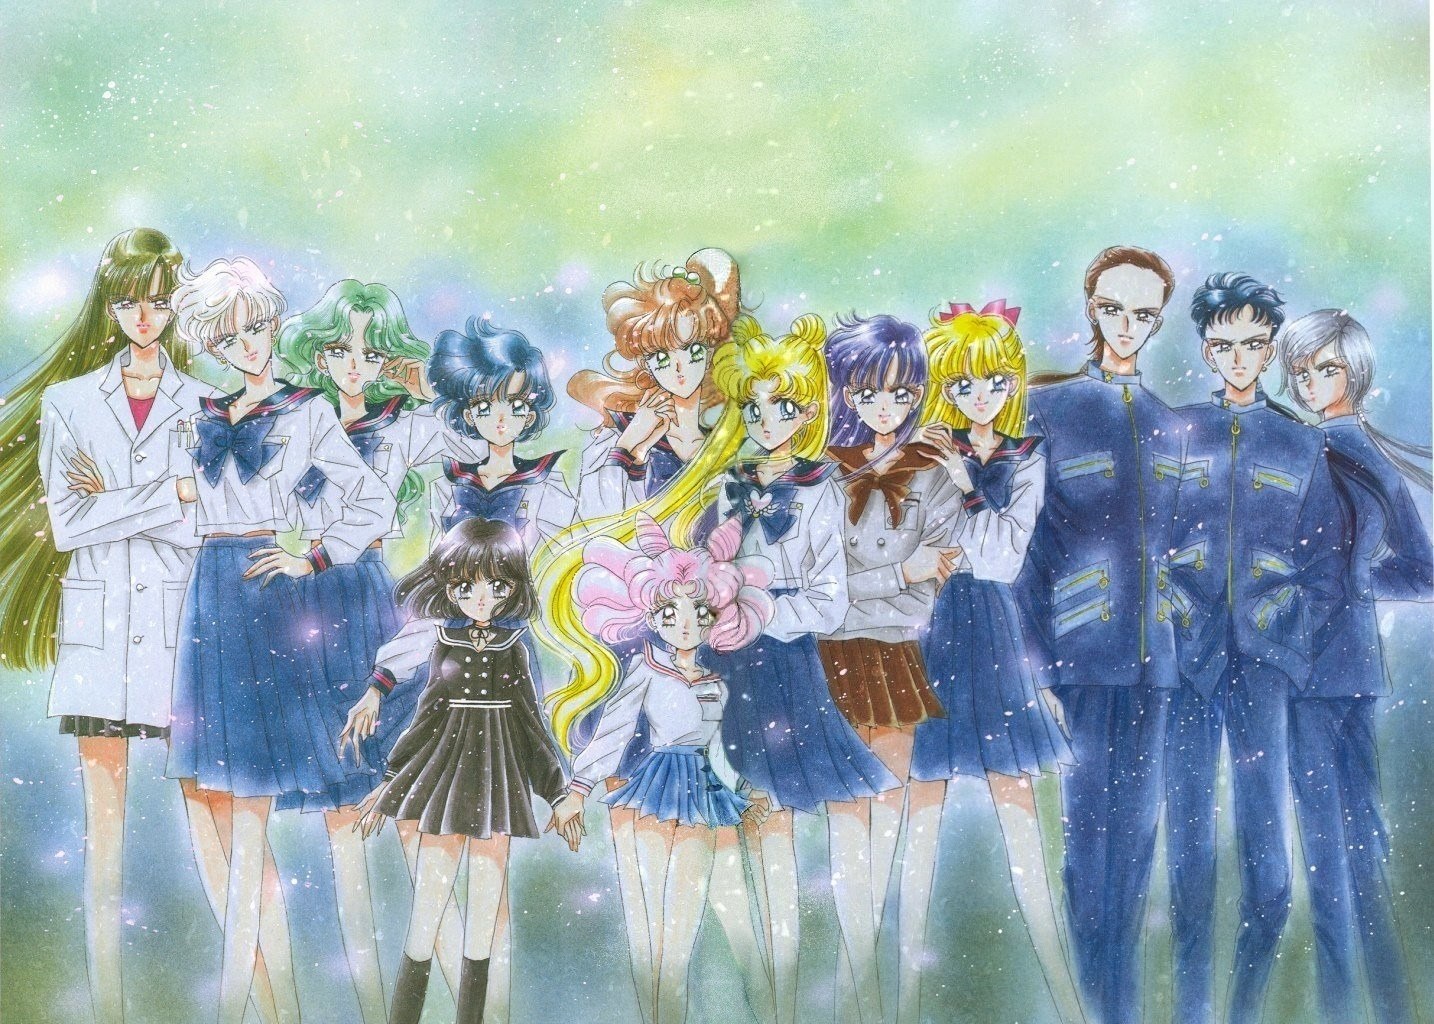 Manga de Sailor Moon Info del Manga Sailor Moon